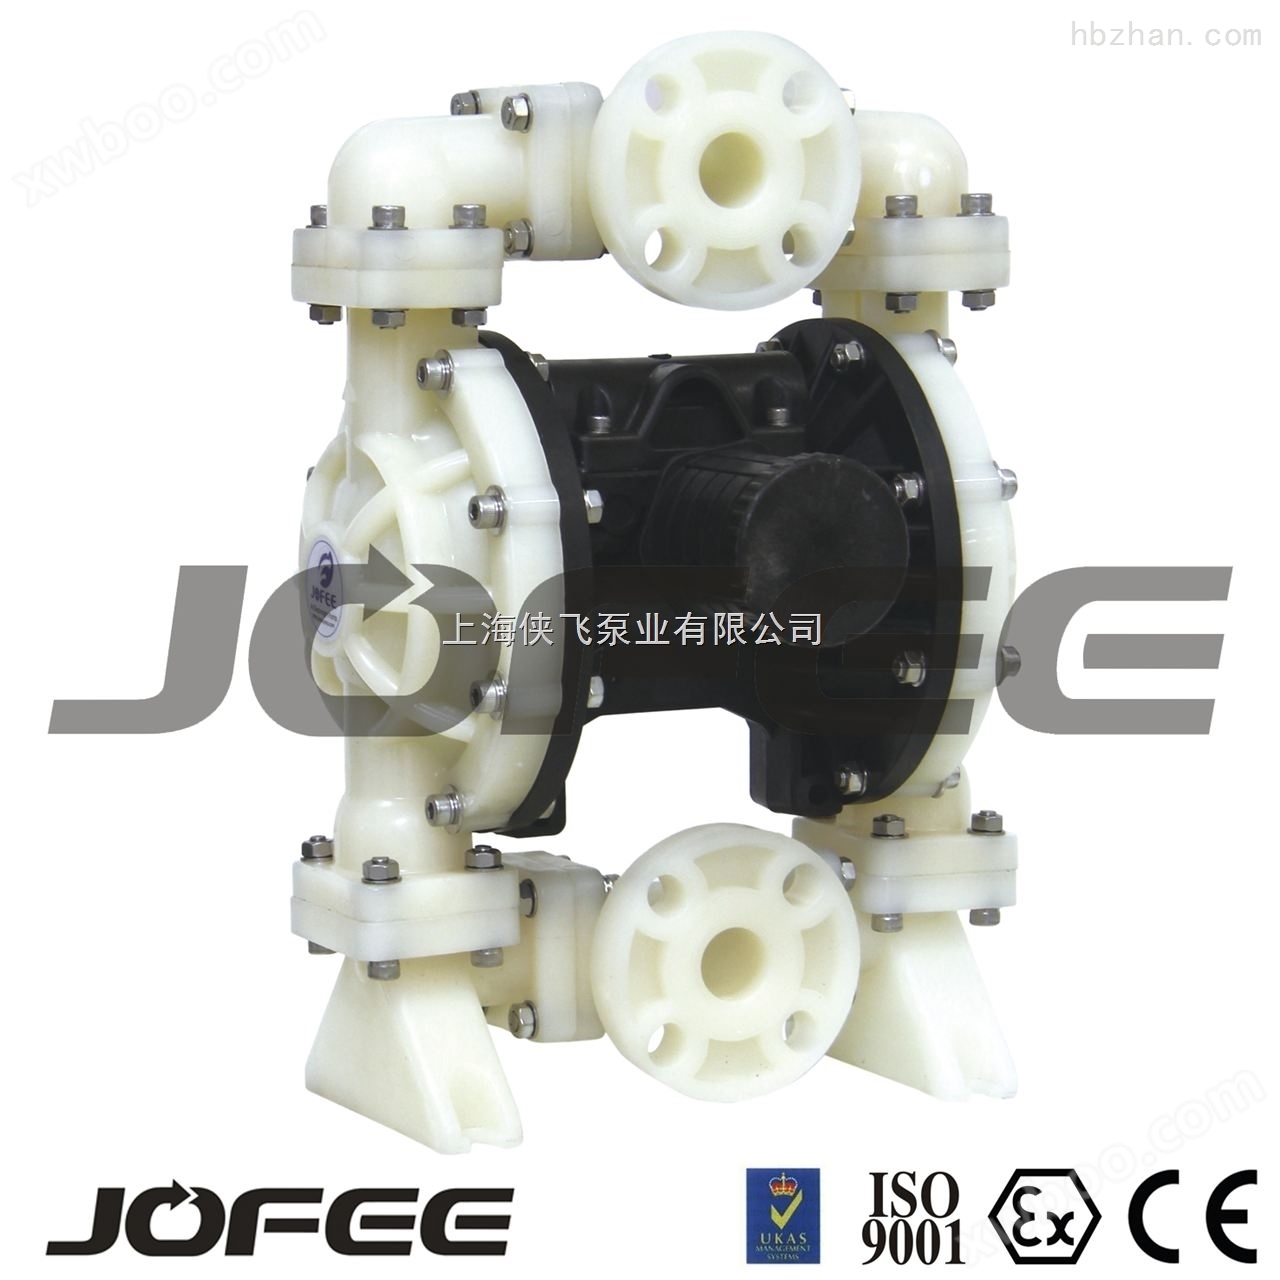 QP120转子泵 JOFEE旋转凸轮泵